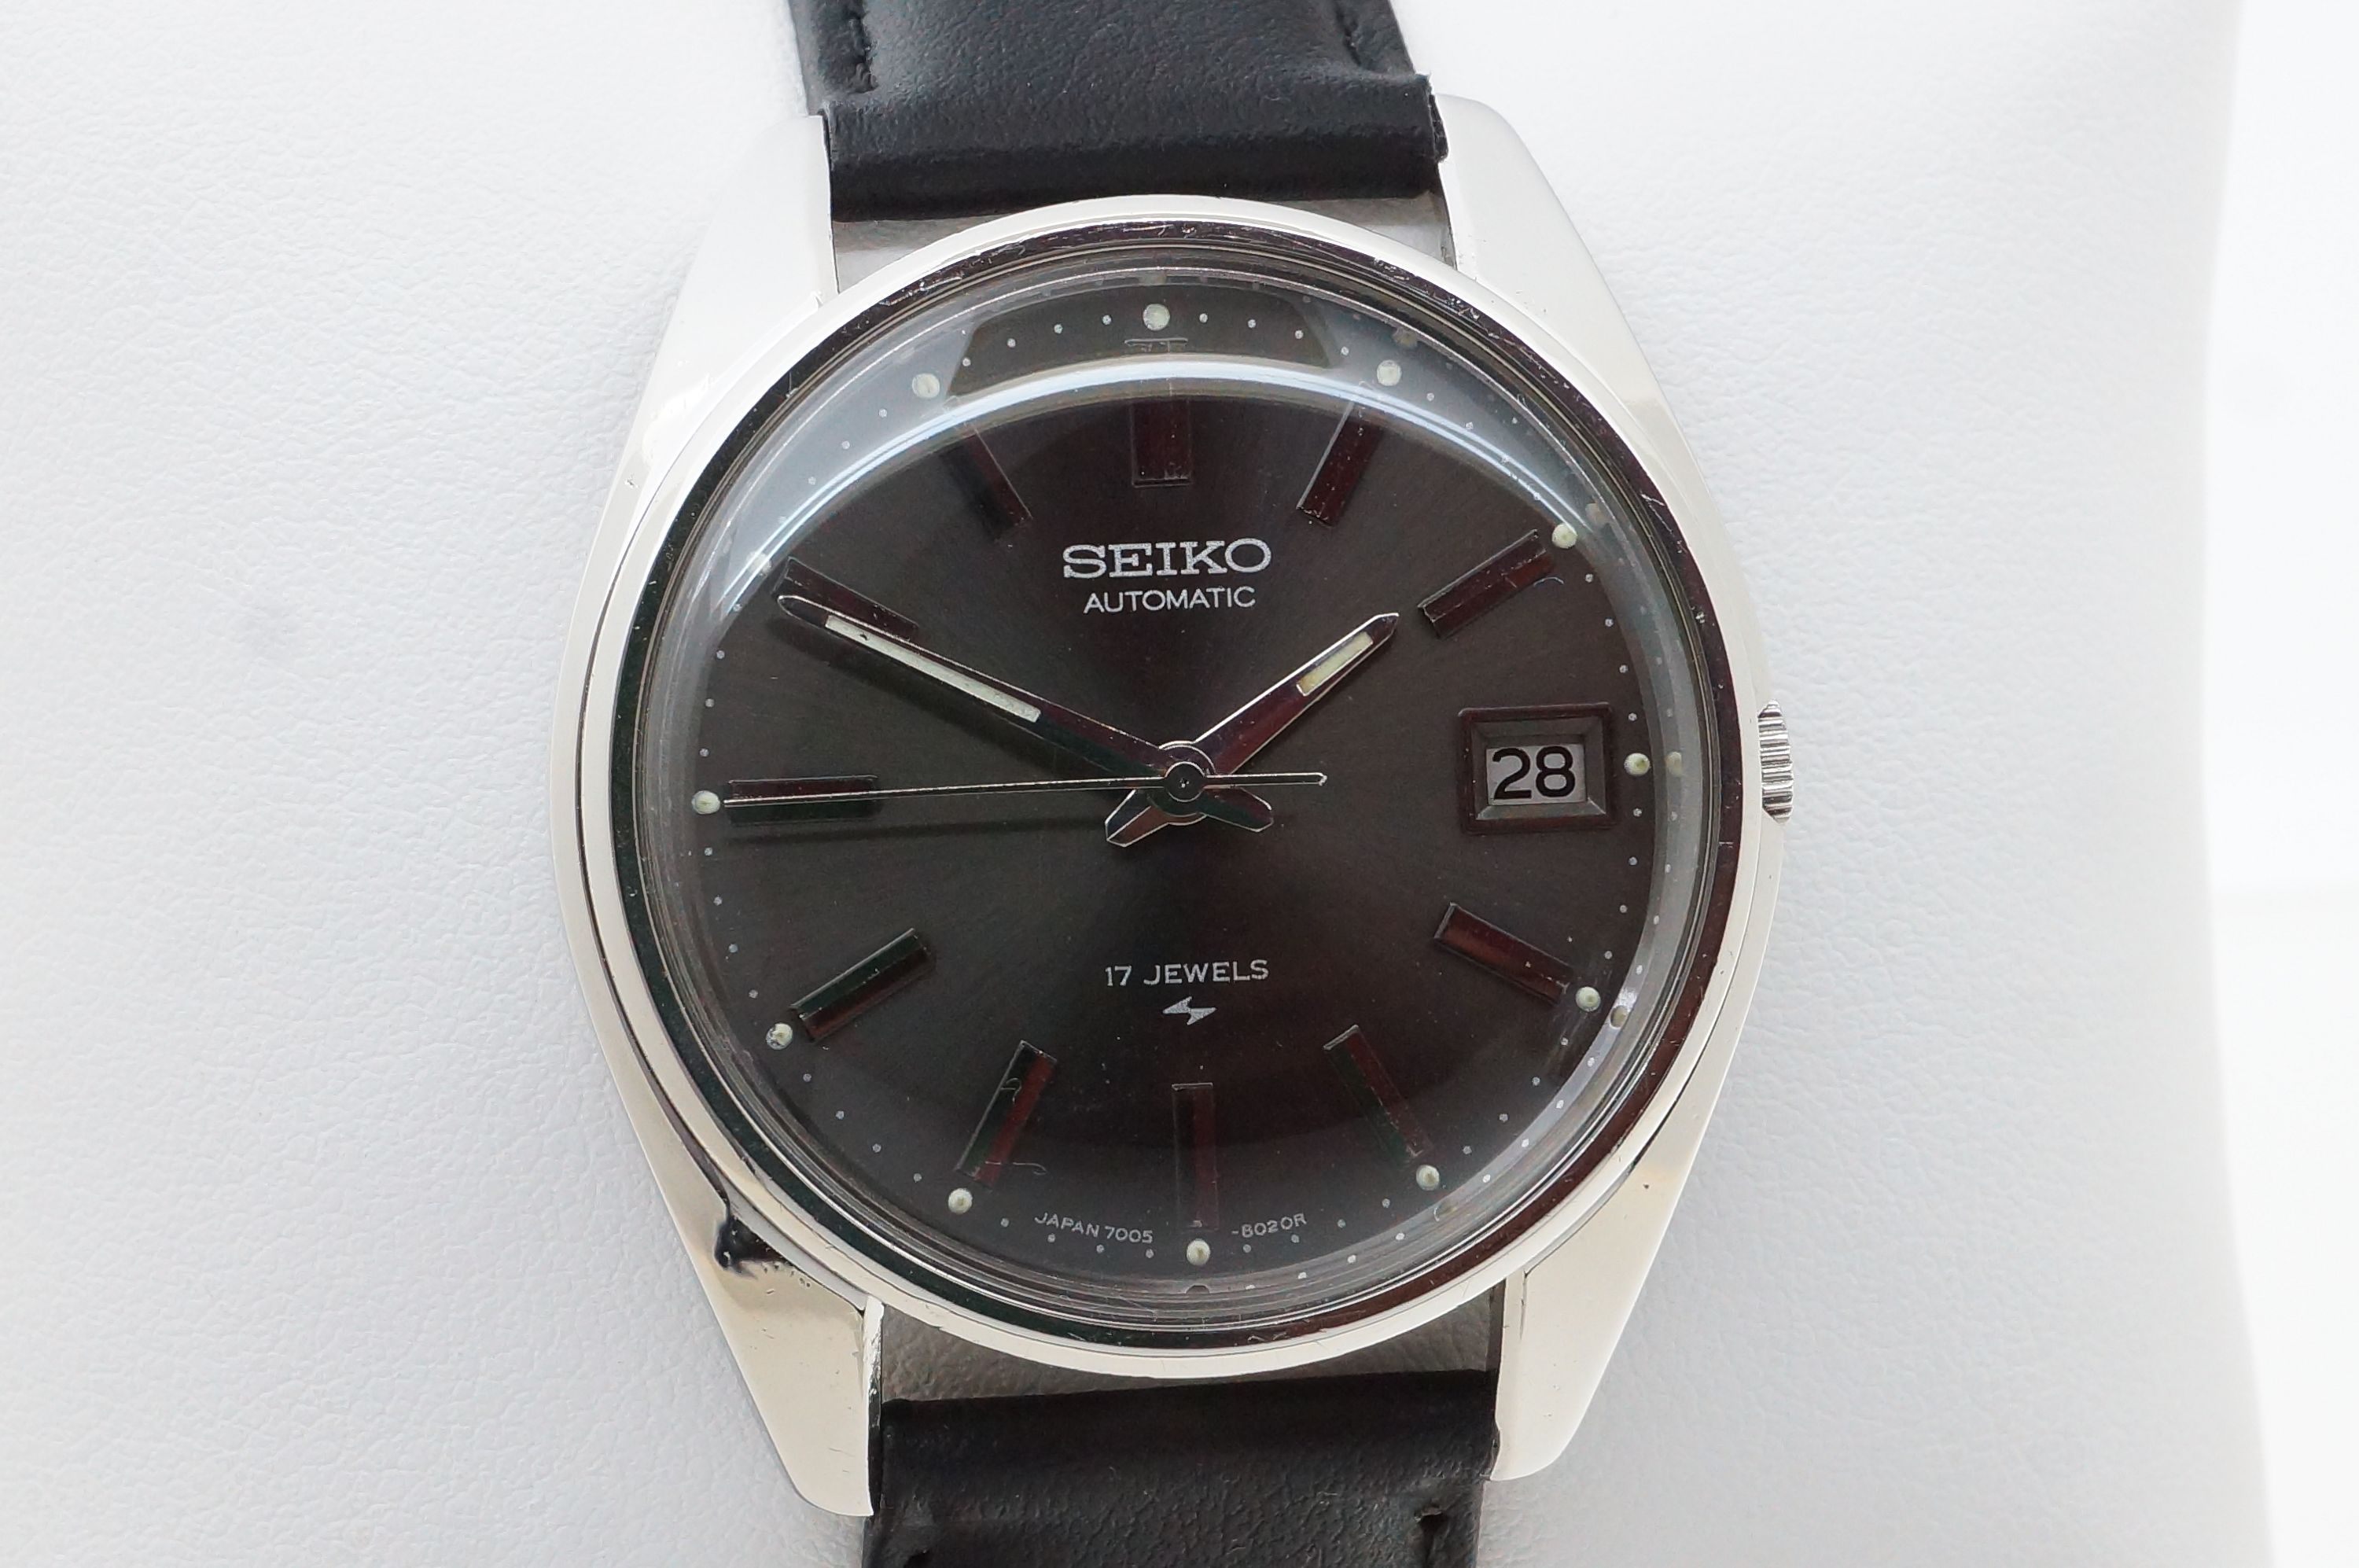 Seiko Automatic 17 Jewels – Kaliber 7005A (1973)